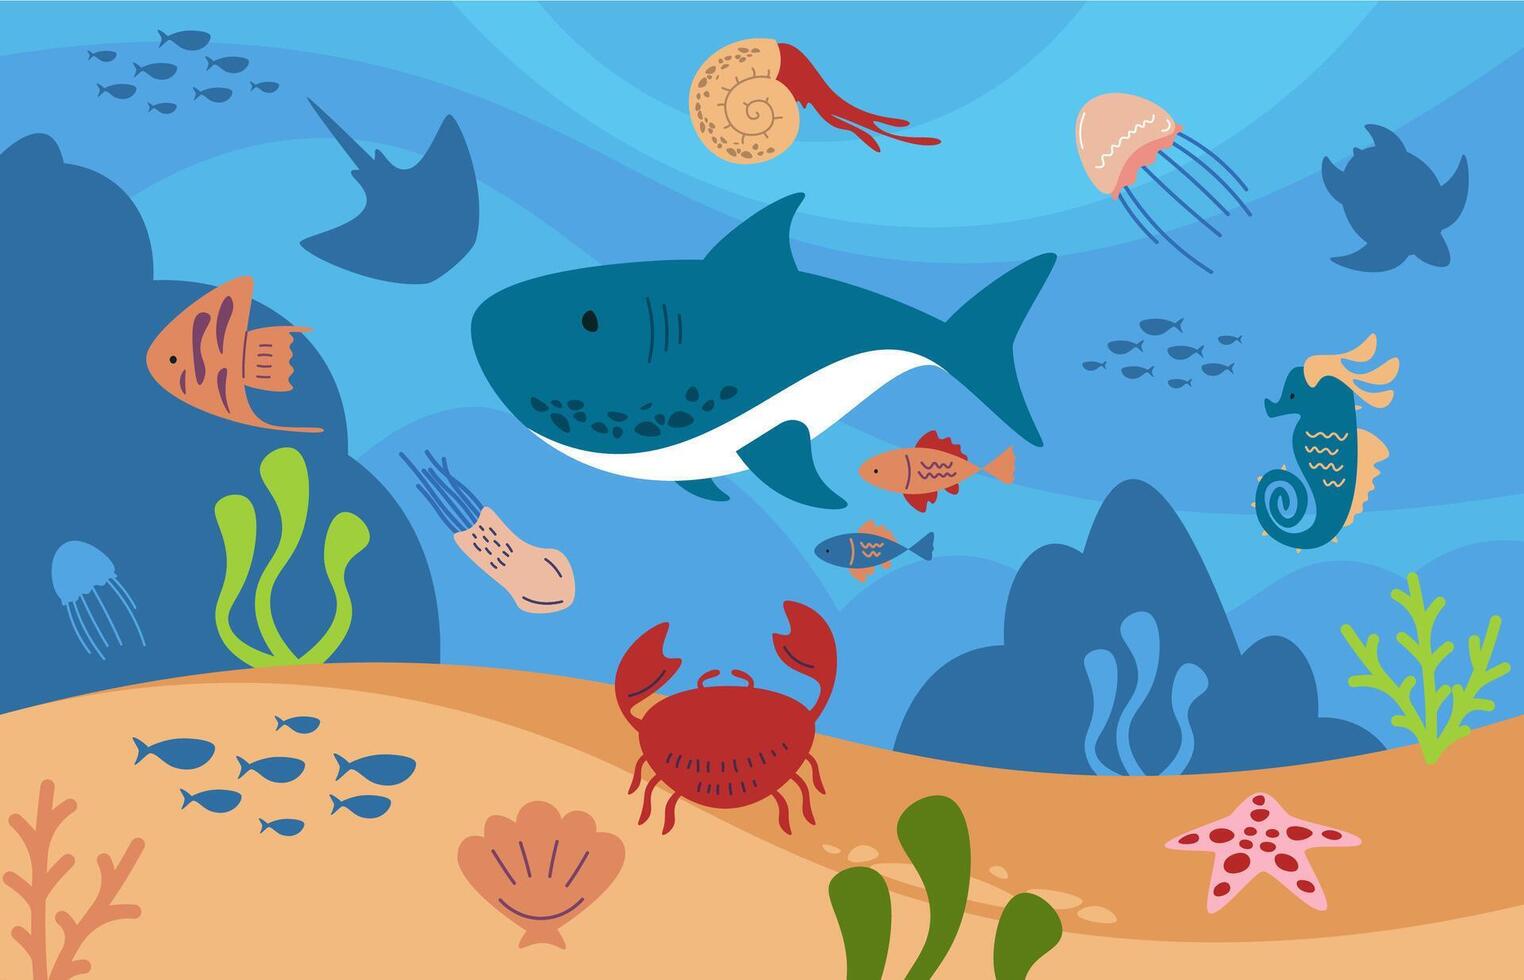 Cartoon underwater landscape with animals. Sea bottom with fish, octopus, jellyfish, crab, algae and seaweed. Vector marine wildlife illustration